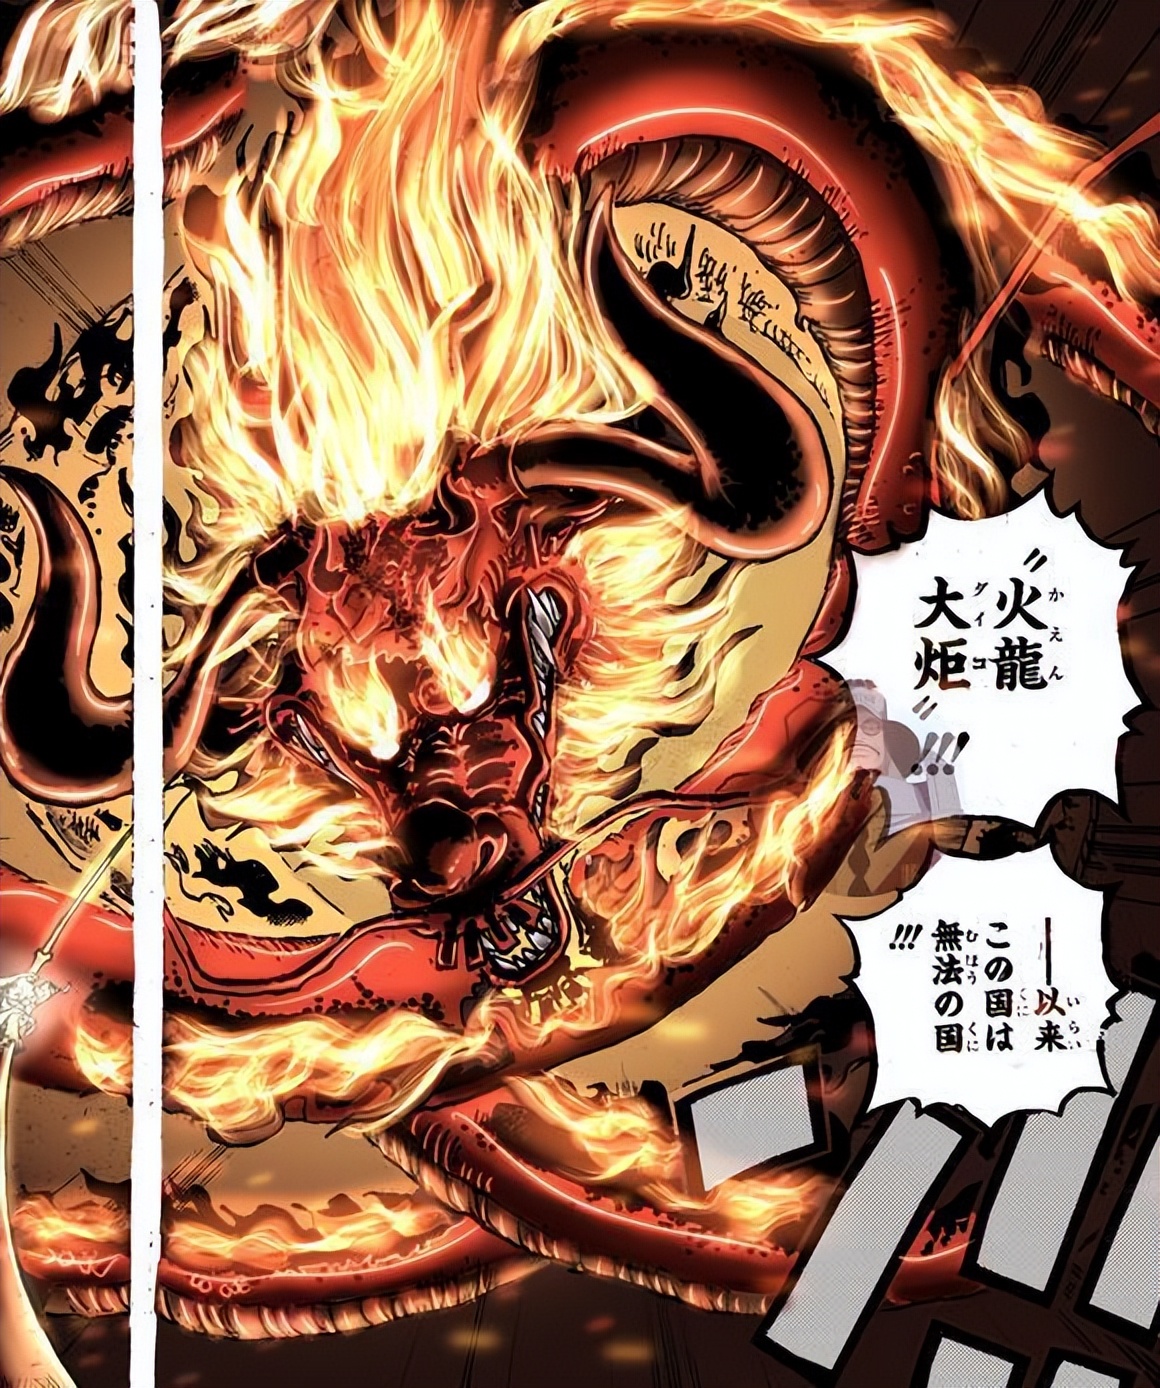 natsu half dragon form｜TikTok Search